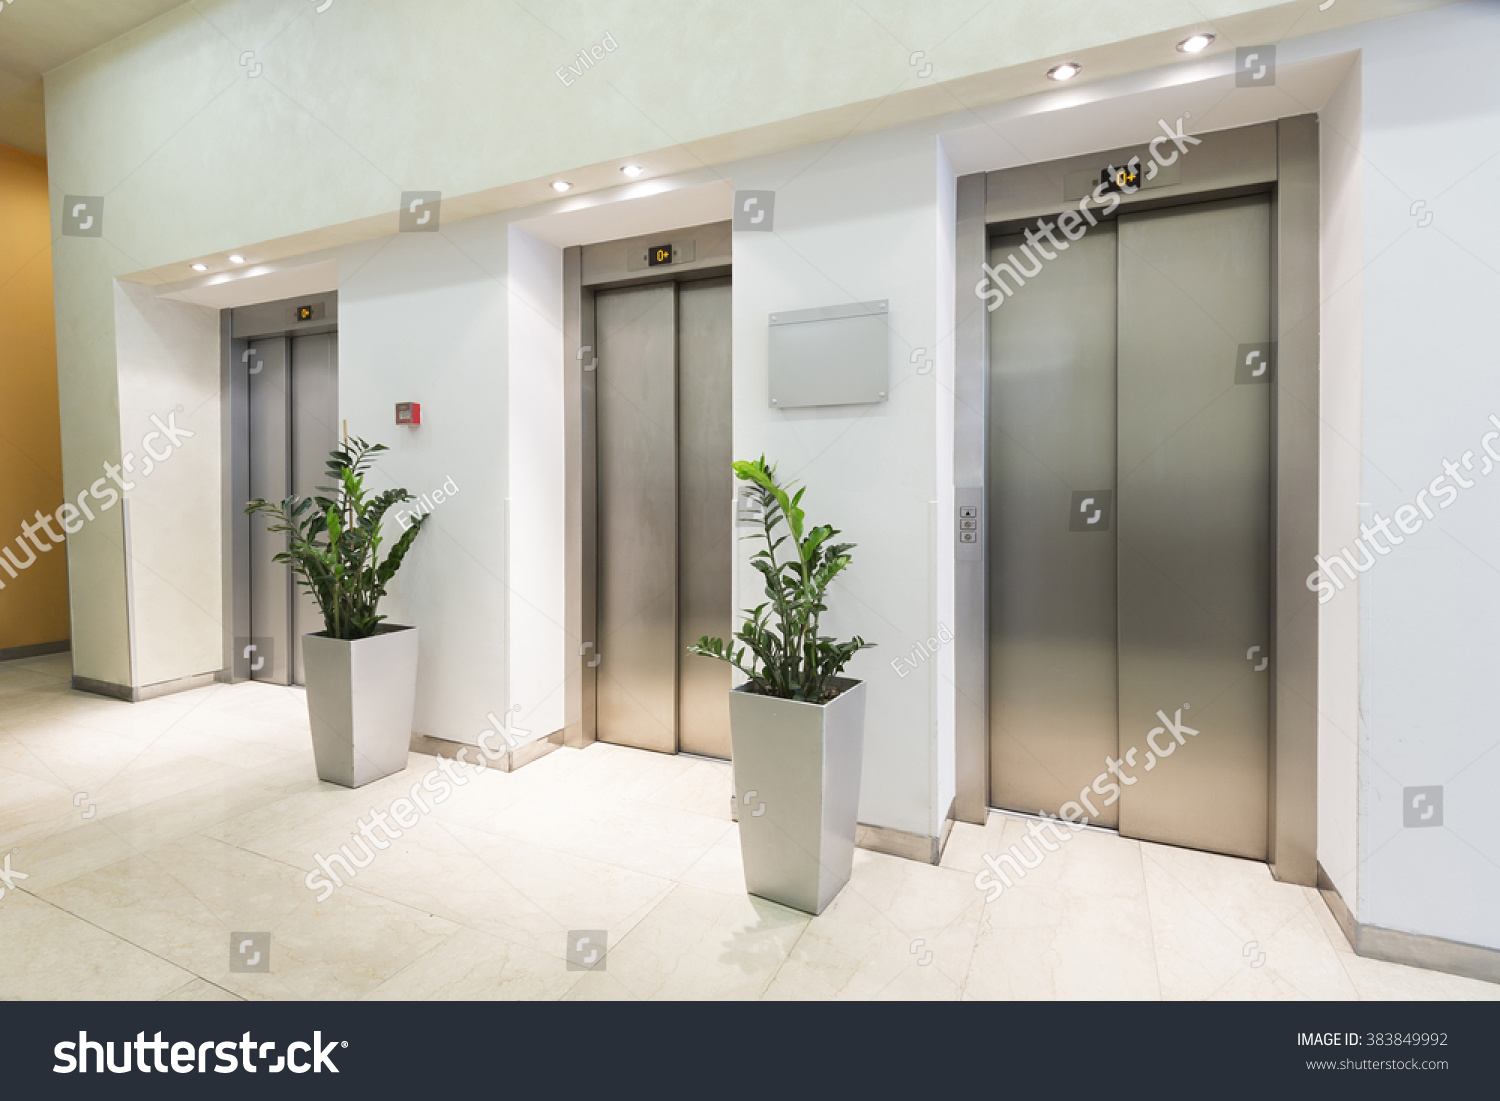 Three elevators in hotel lobby #383849992